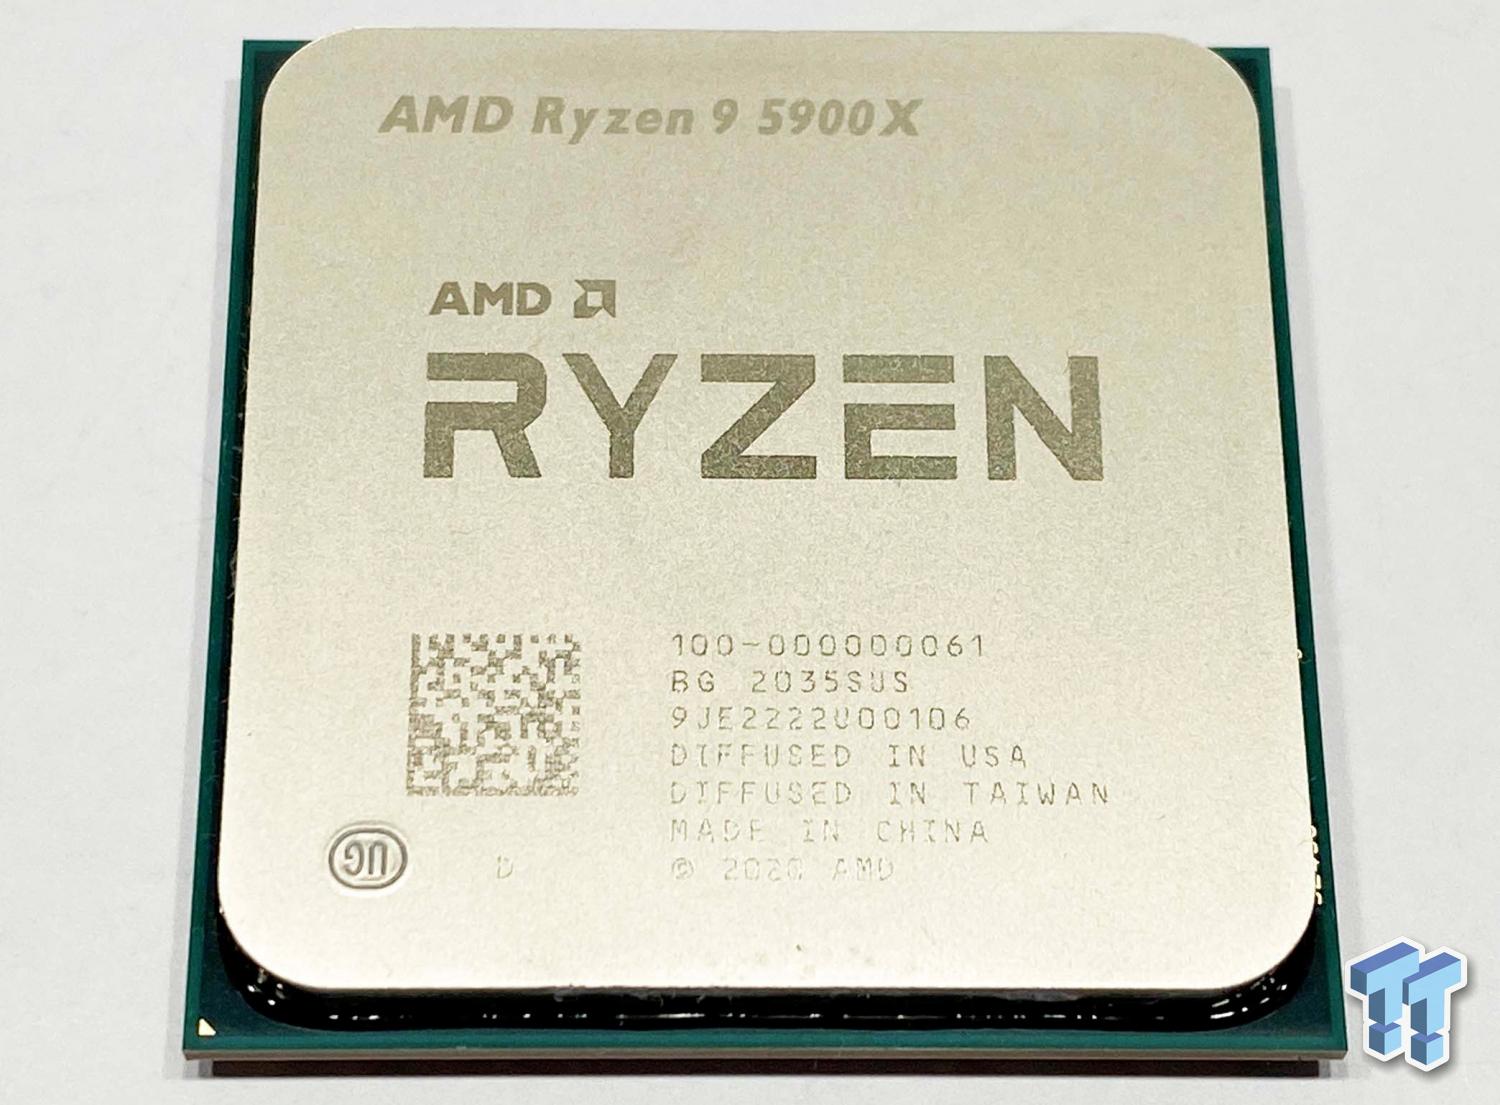 AMD Ryzen 9 5900X (Zen CPU 3) Review